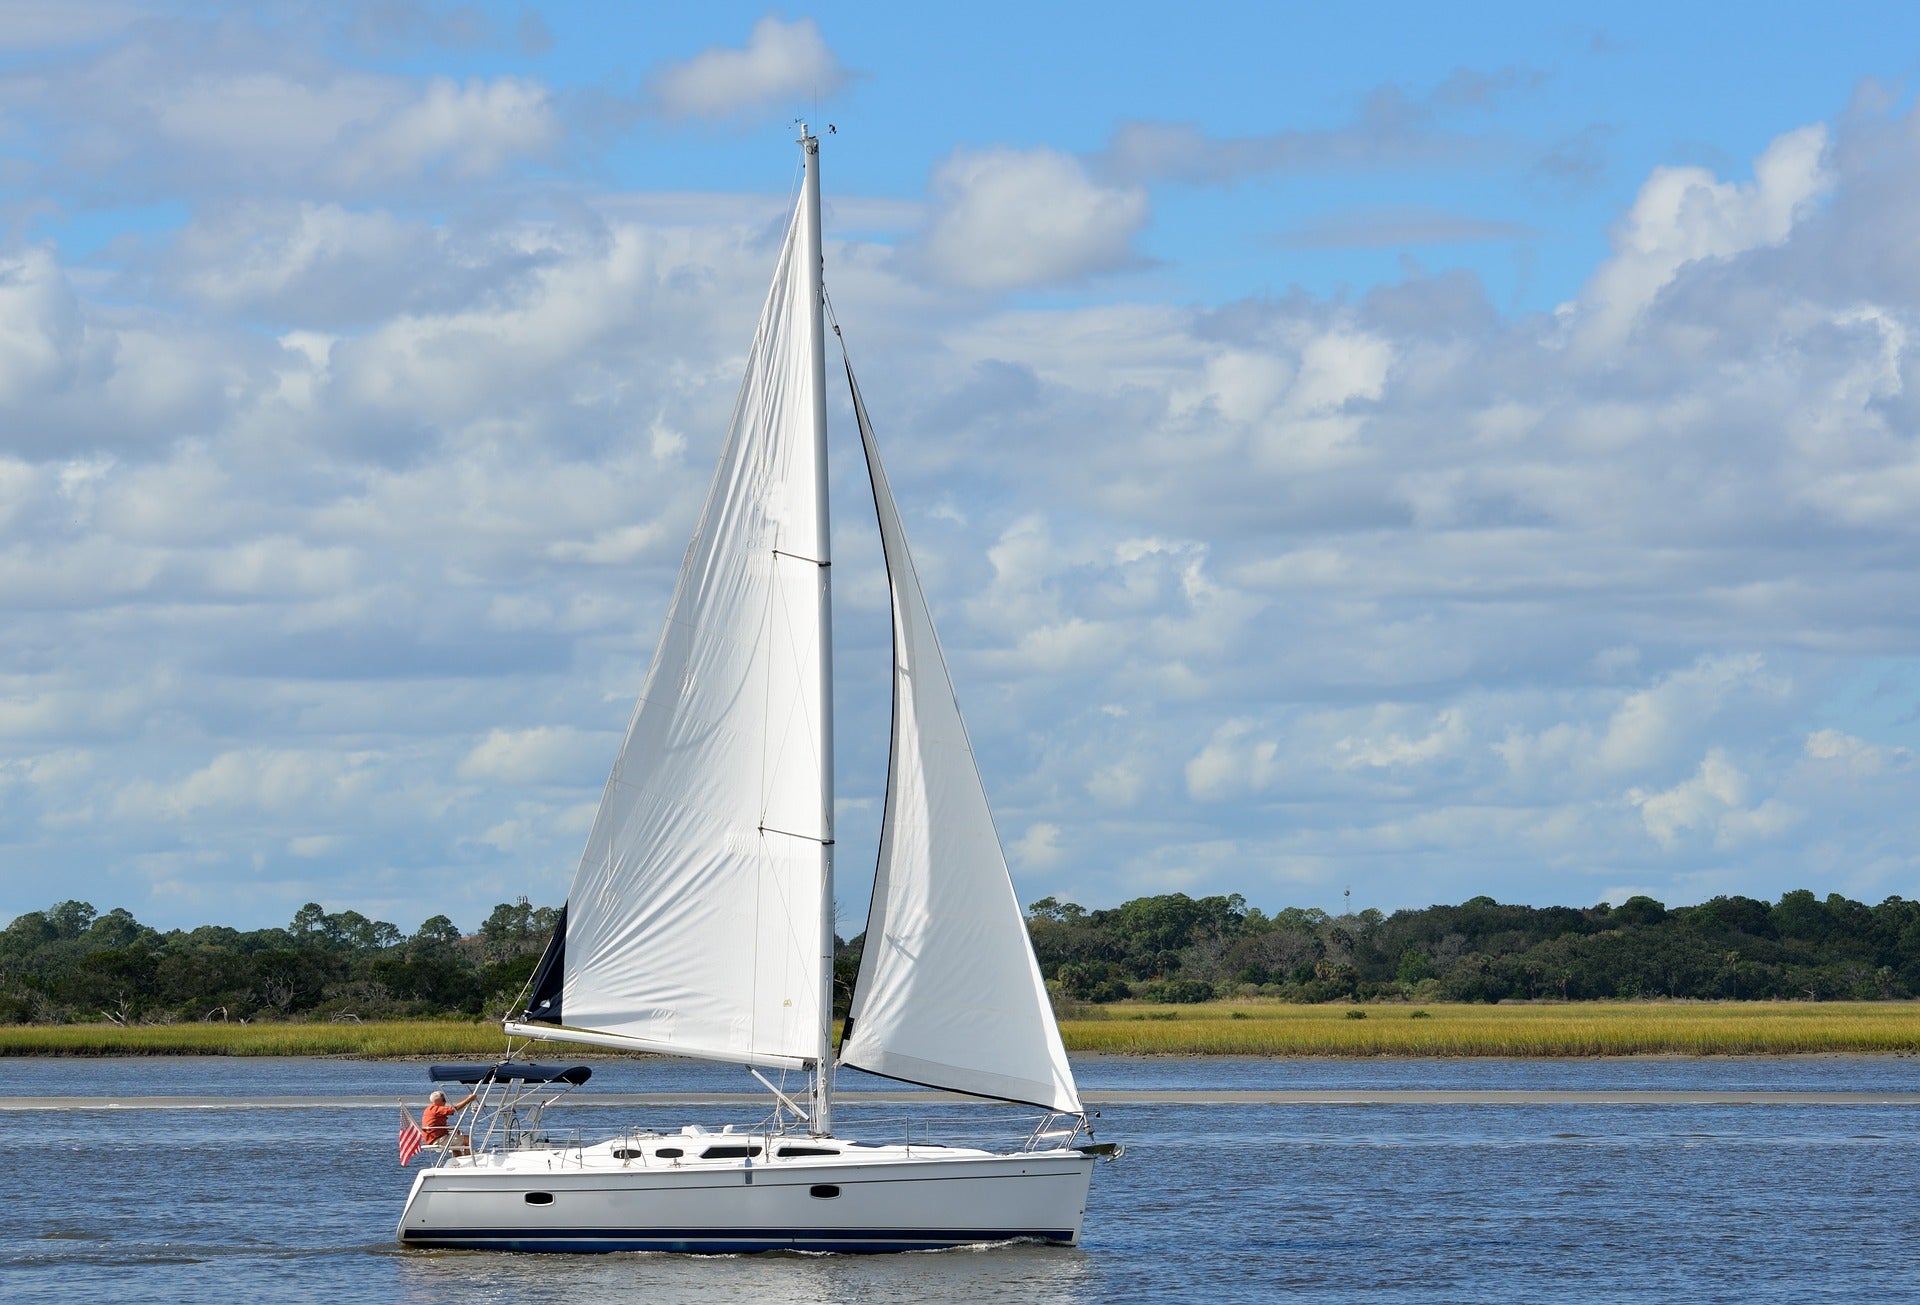  A public domain sailboat image.  